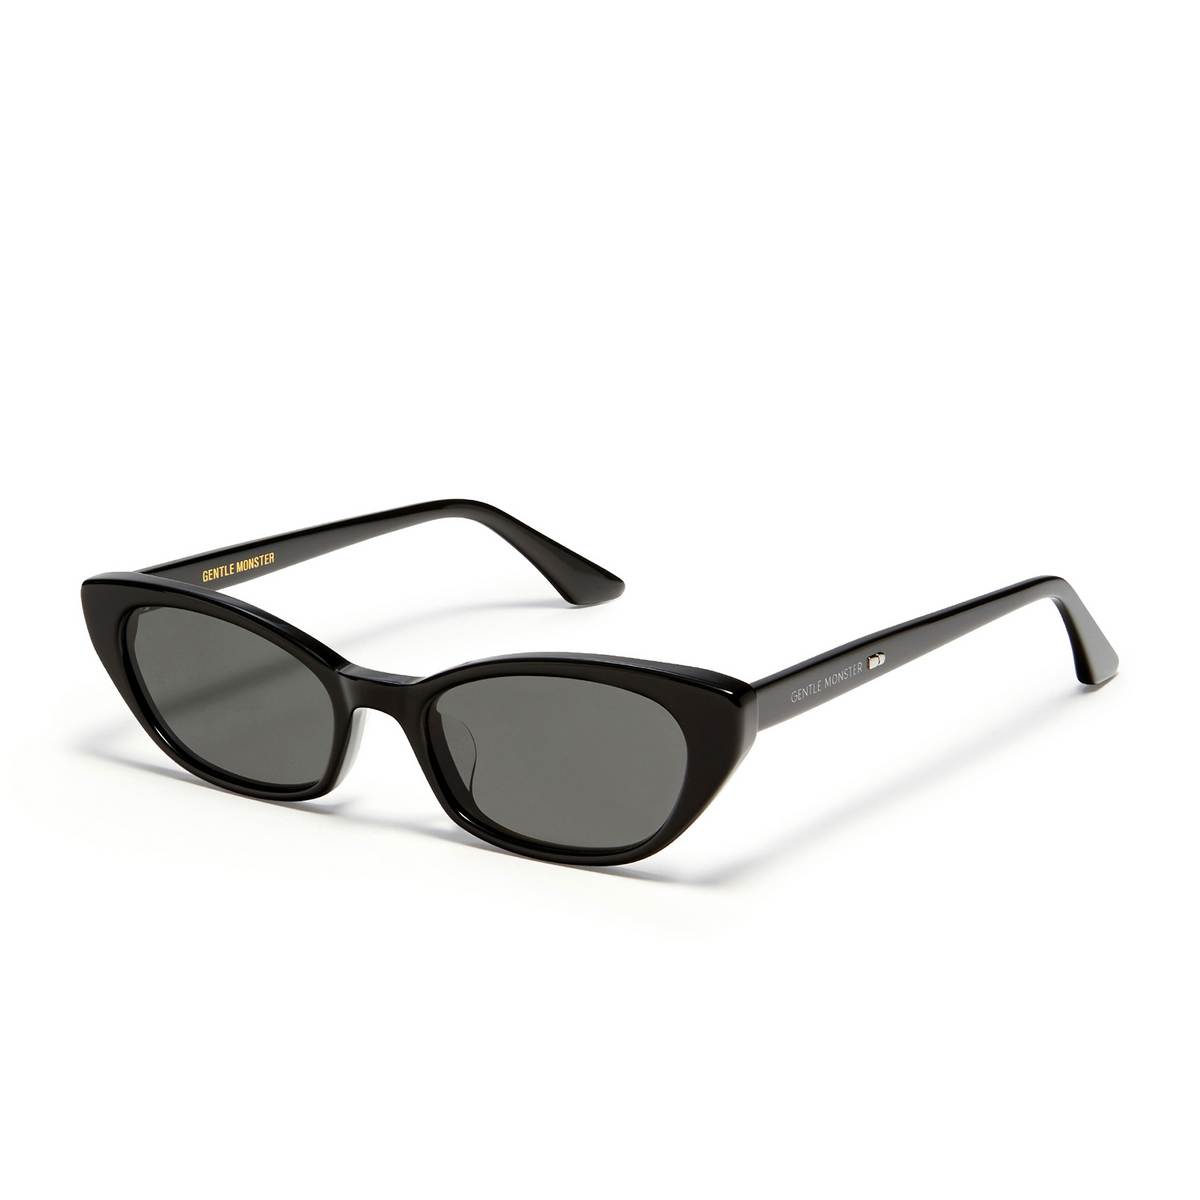 Gentle Monster® Oval Sunglasses: Pesh color Black 01 - three-quarters view.